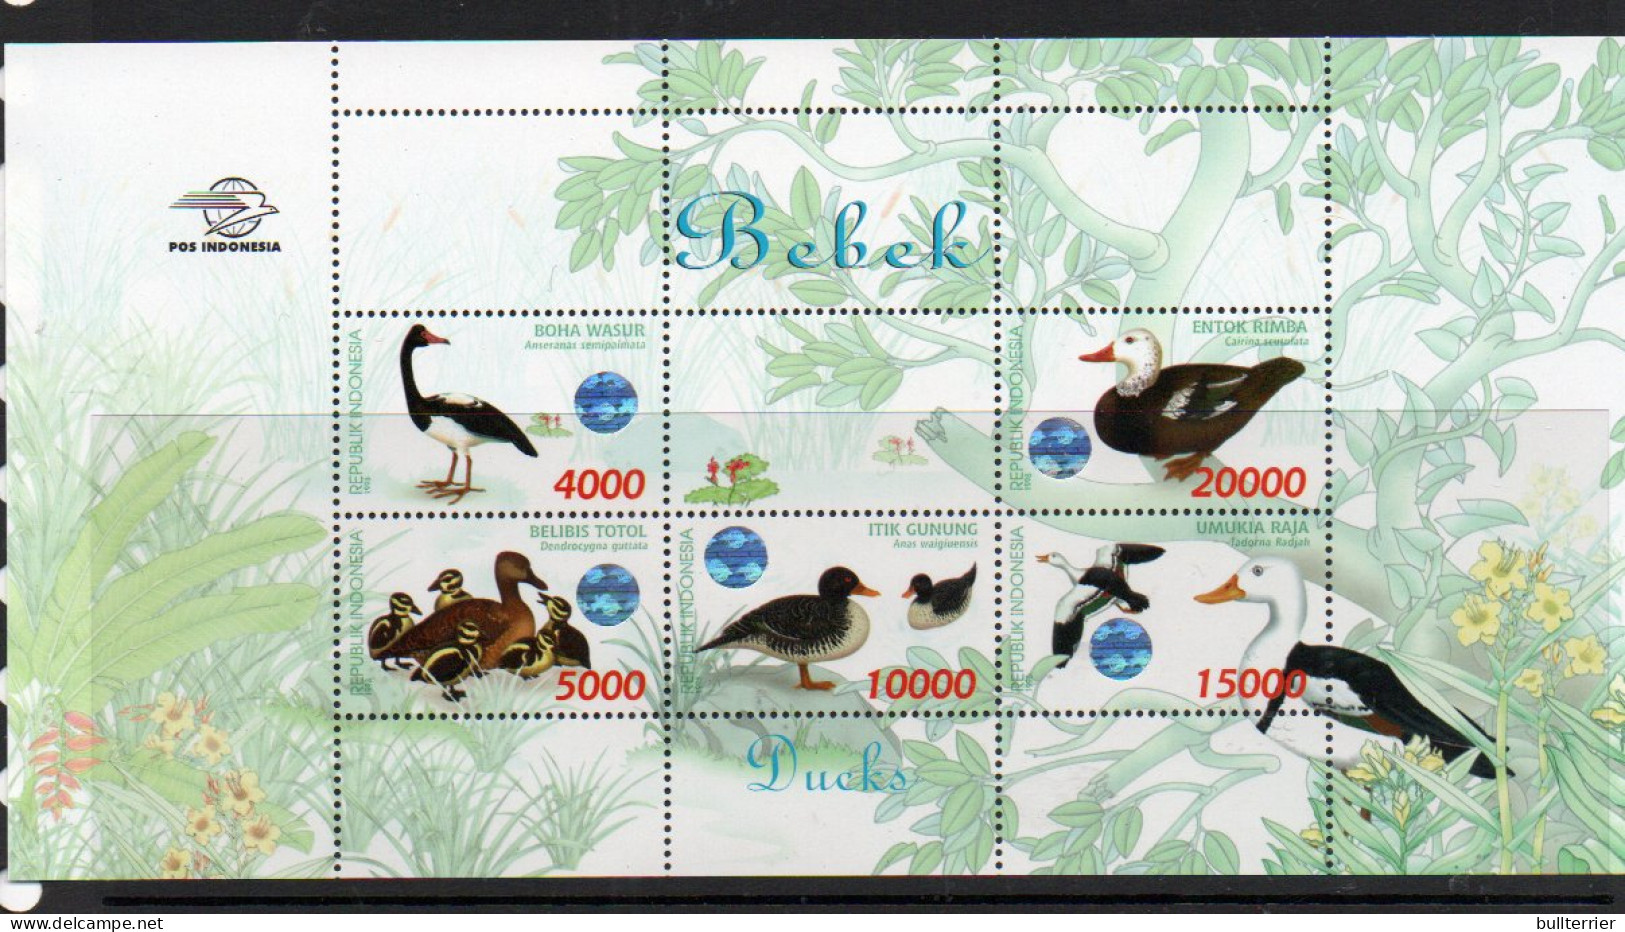 BIRDS - INDONESIA-  1998- WATERFOWL SOUVENIR SHEET  MINT NEVER HINGED,SG £30 - Pigeons & Columbiformes